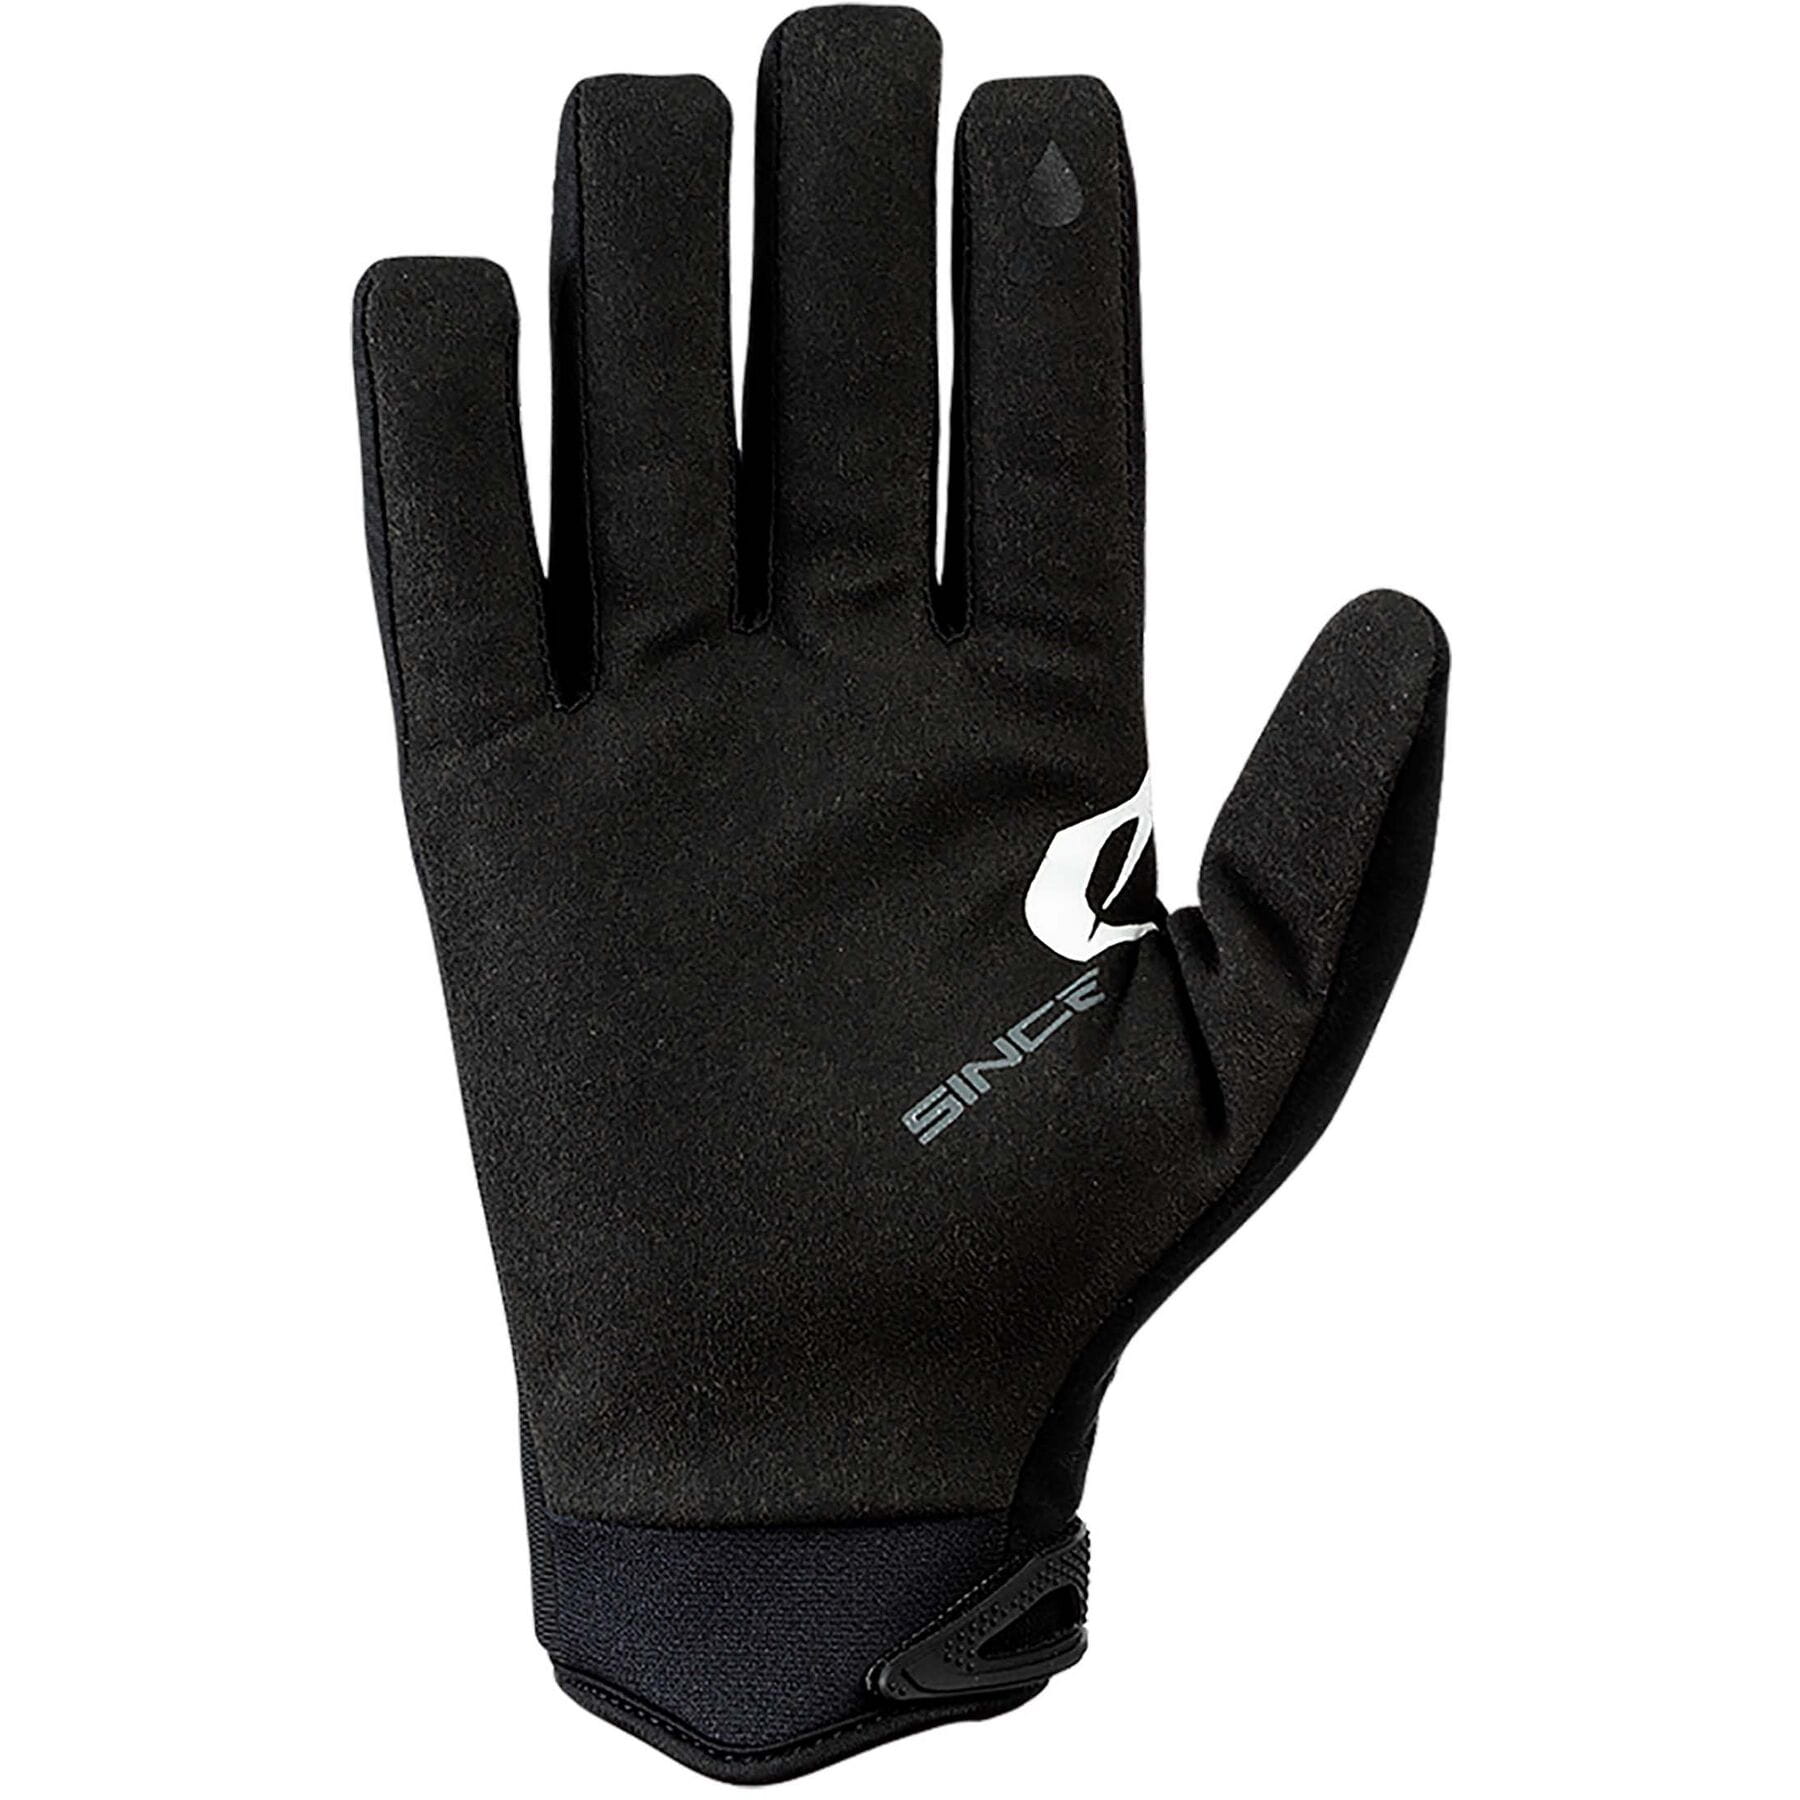 Black WINTER WP Glove size Large displayed on a plain background